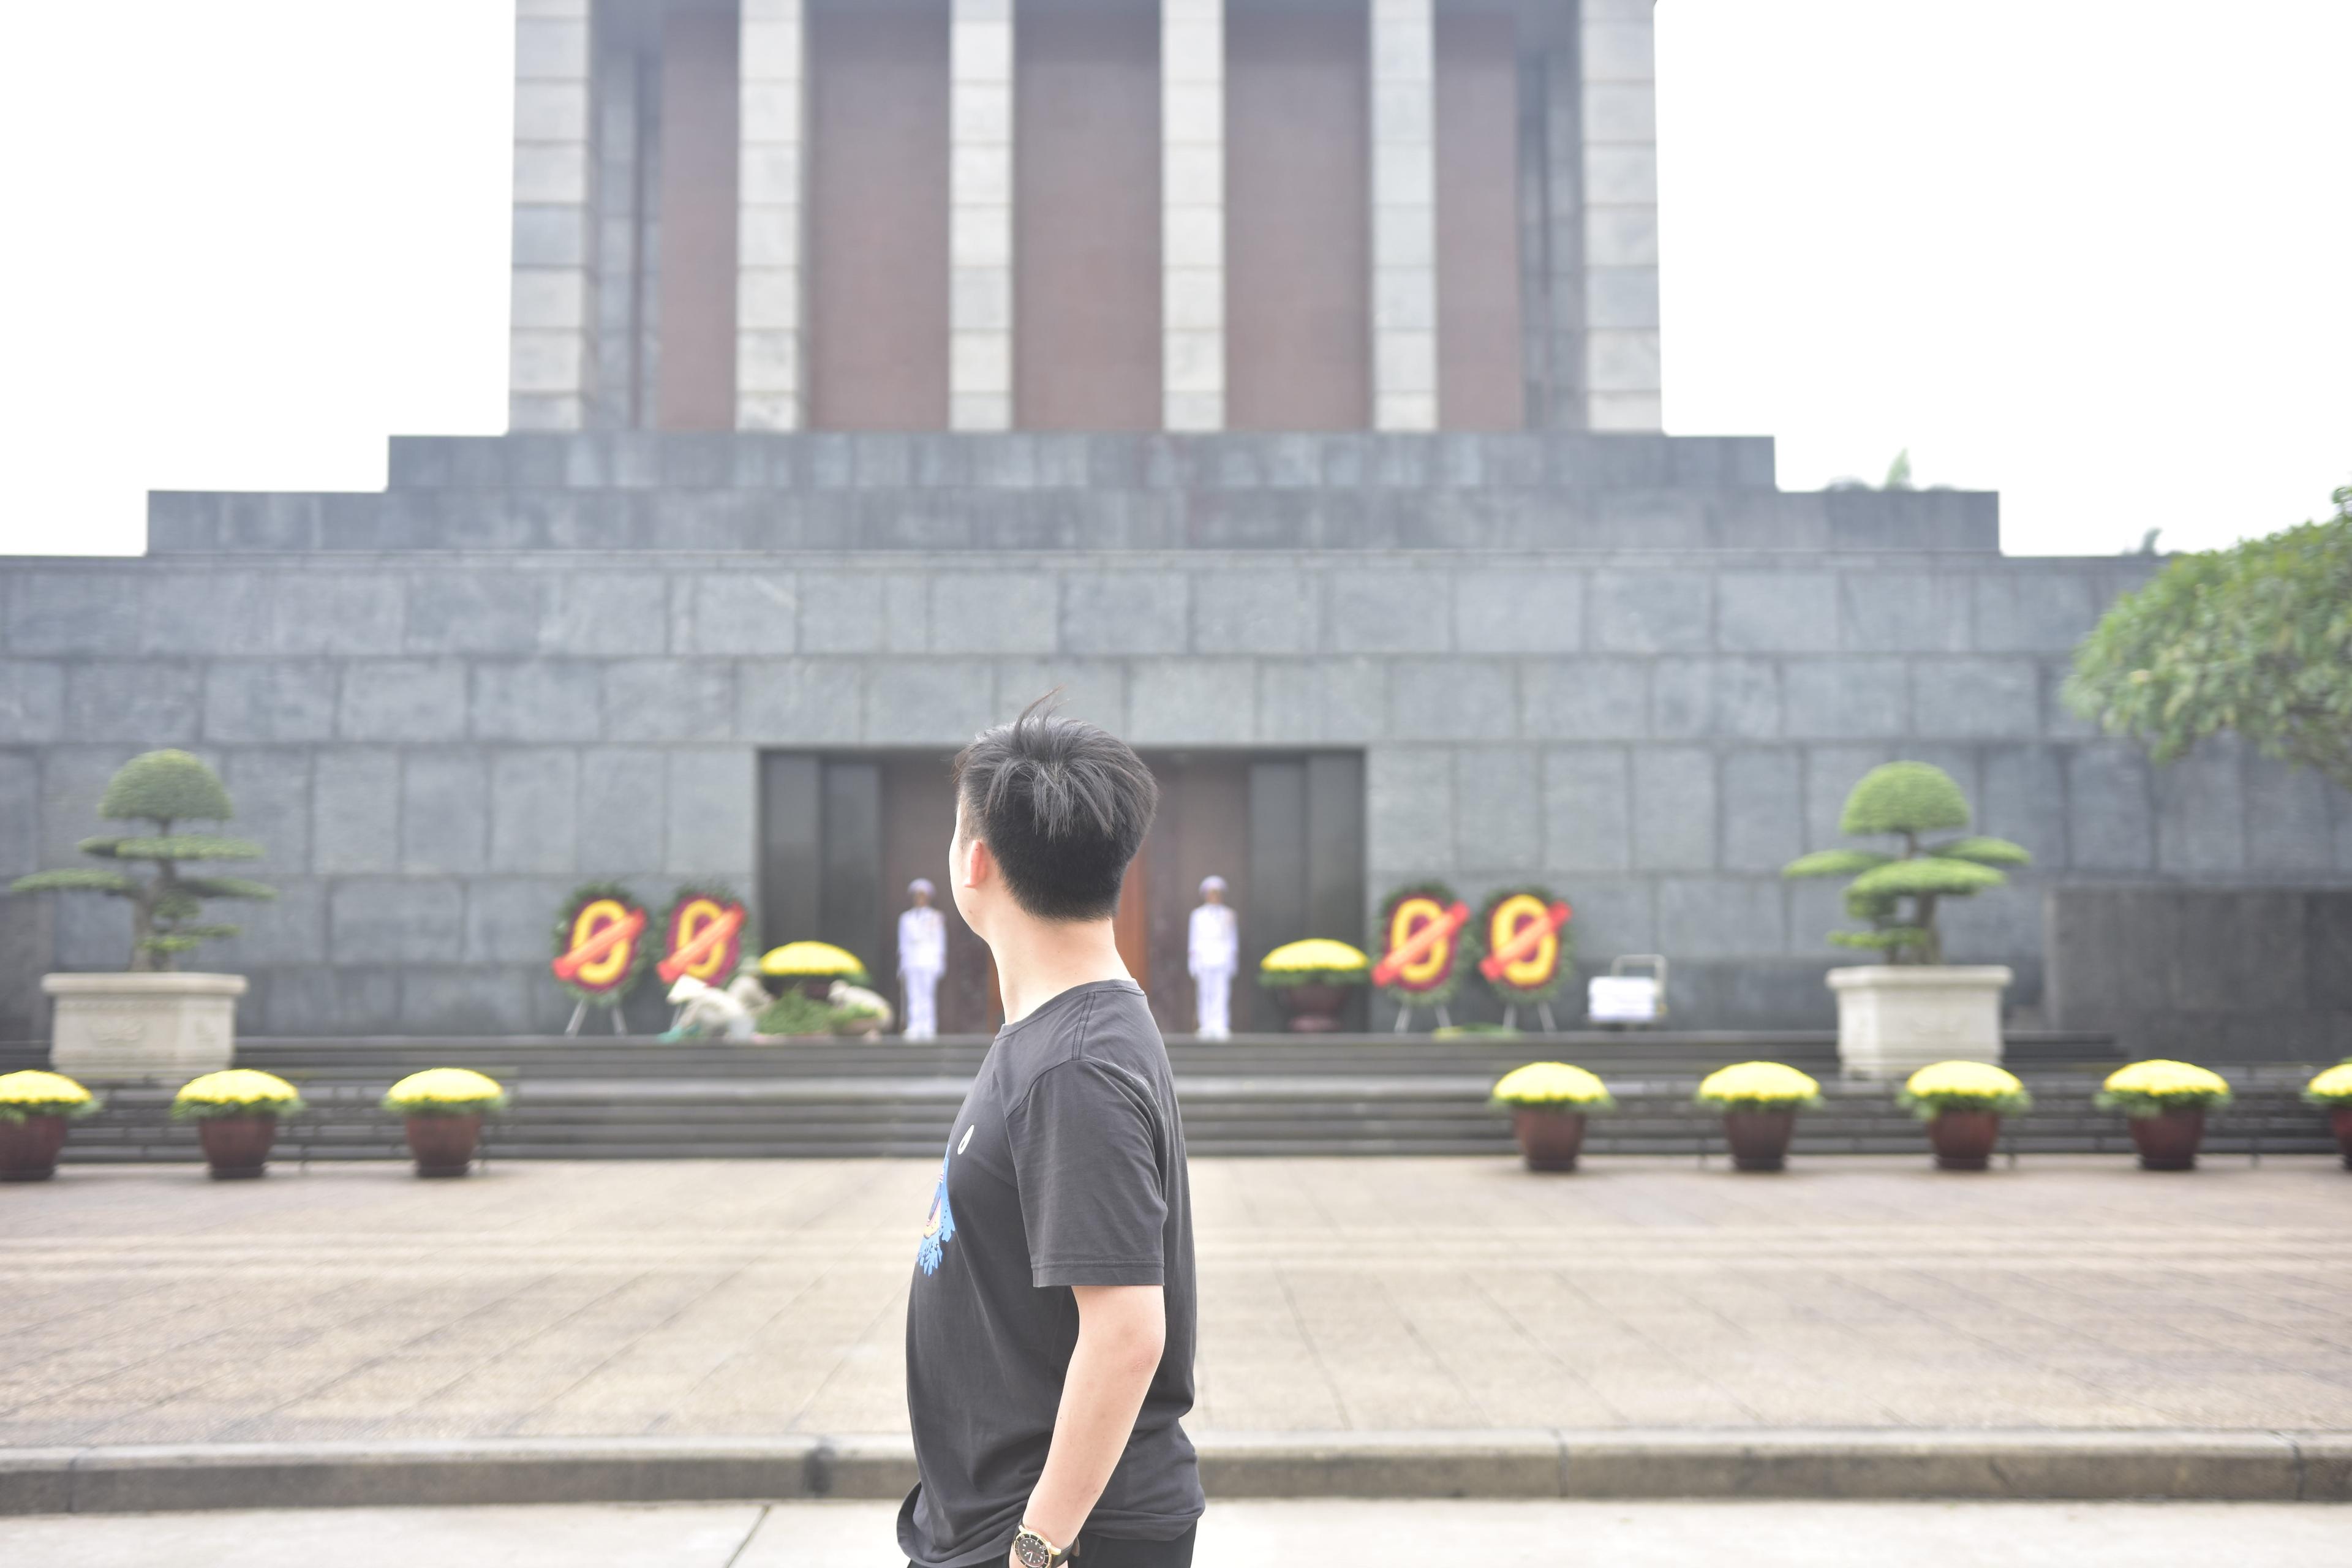 Cover image of this place Lăng Chủ Tịch Hồ Chí Minh (Ho Chi Minh Mausoleum)